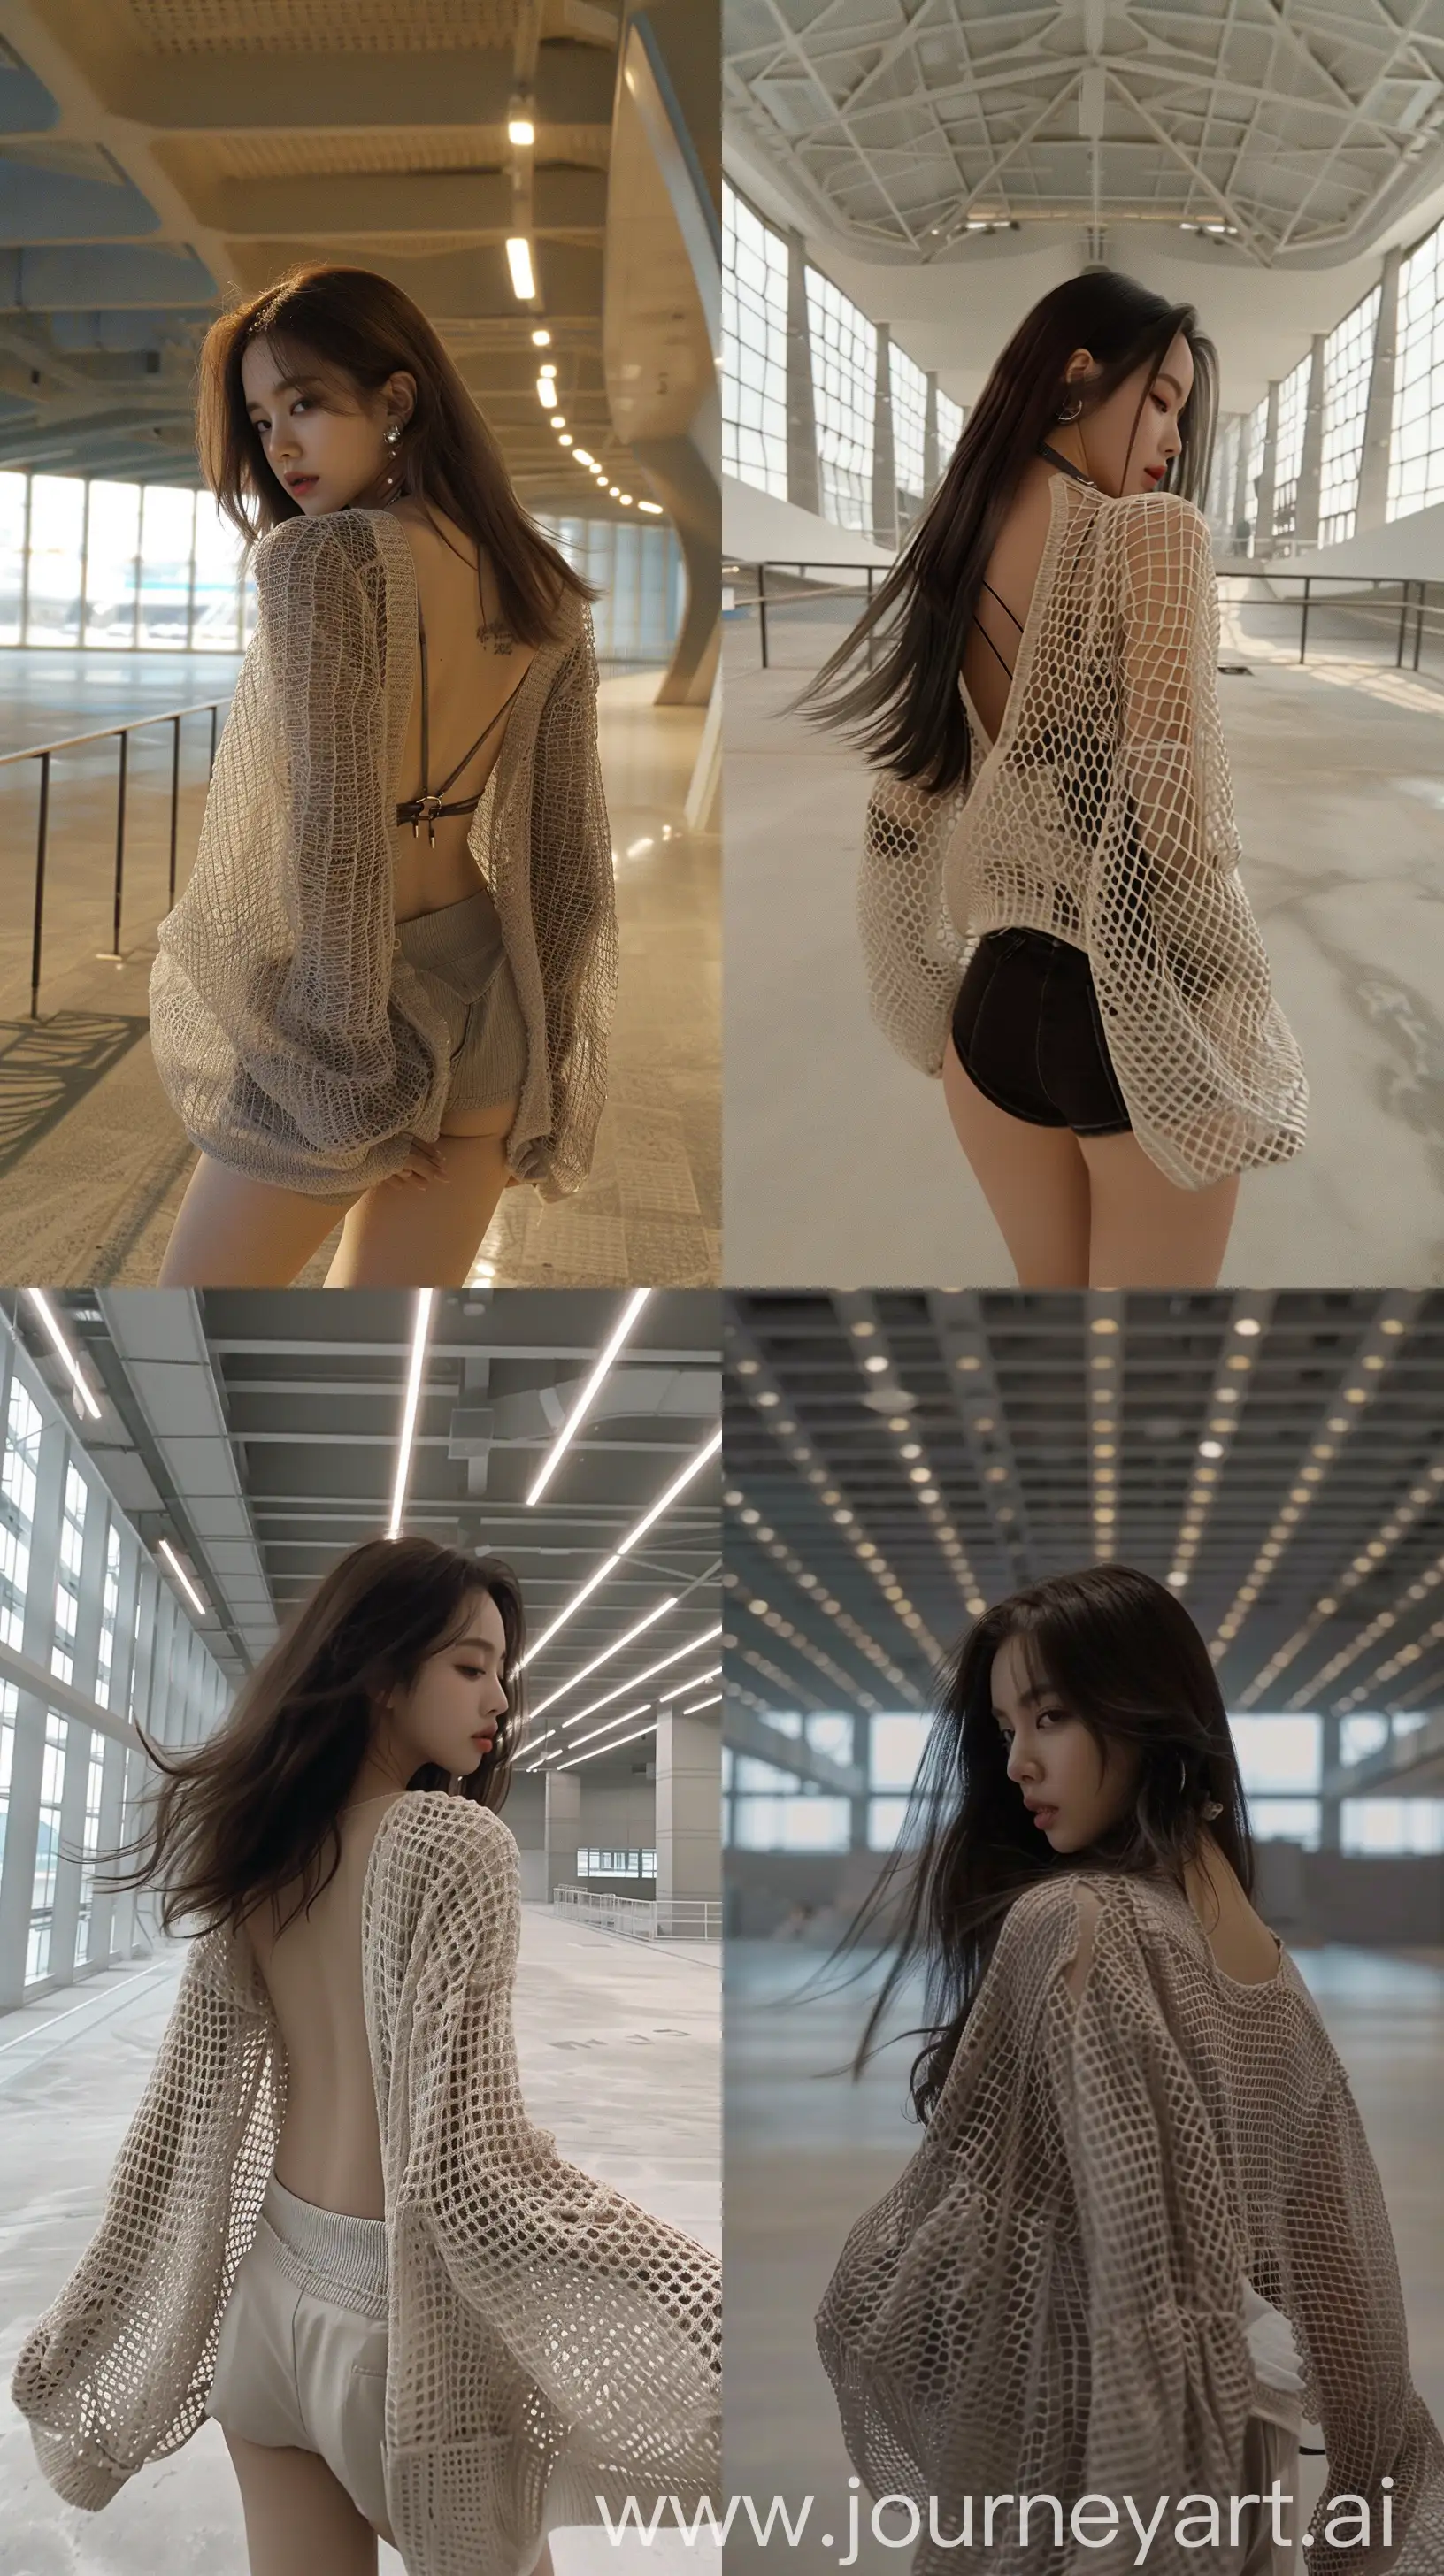 Jennie-from-Blackpink-in-Chic-Korean-Outfit-Walking-Through-Modern-Hallway